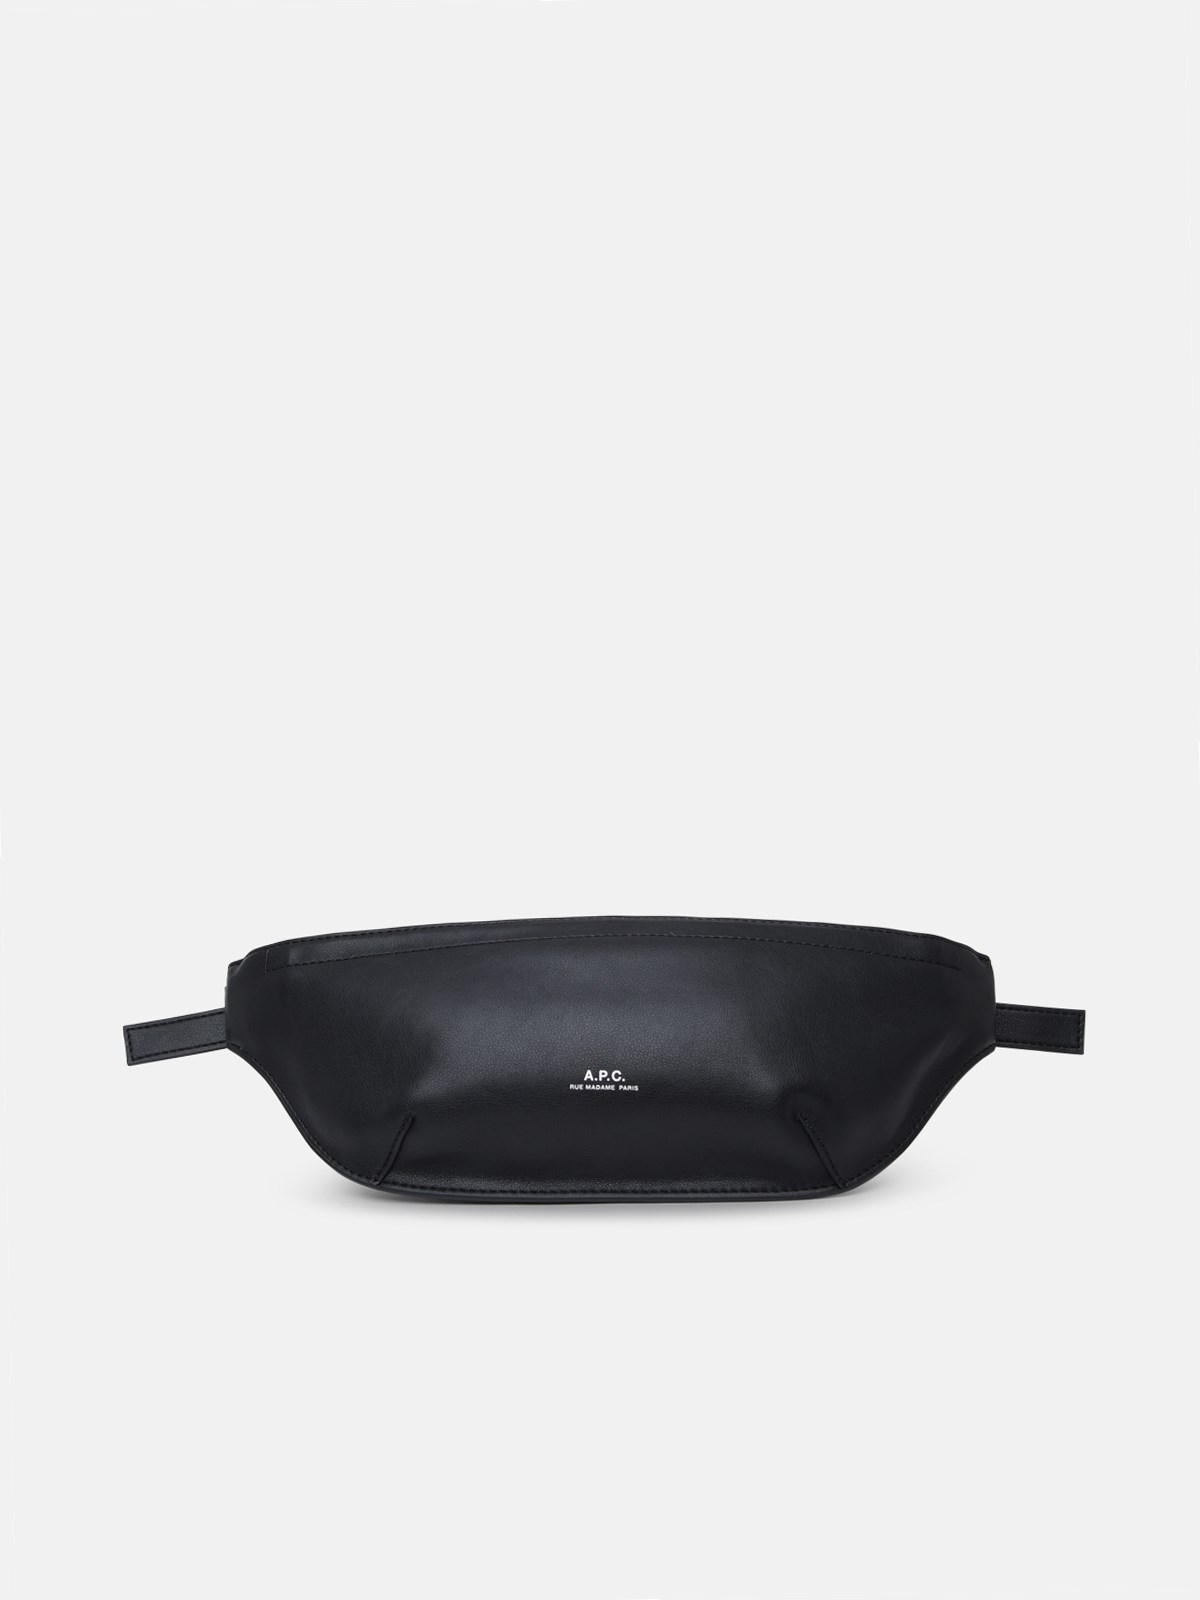 A.p.c. Black Leather Nino Belt Bag